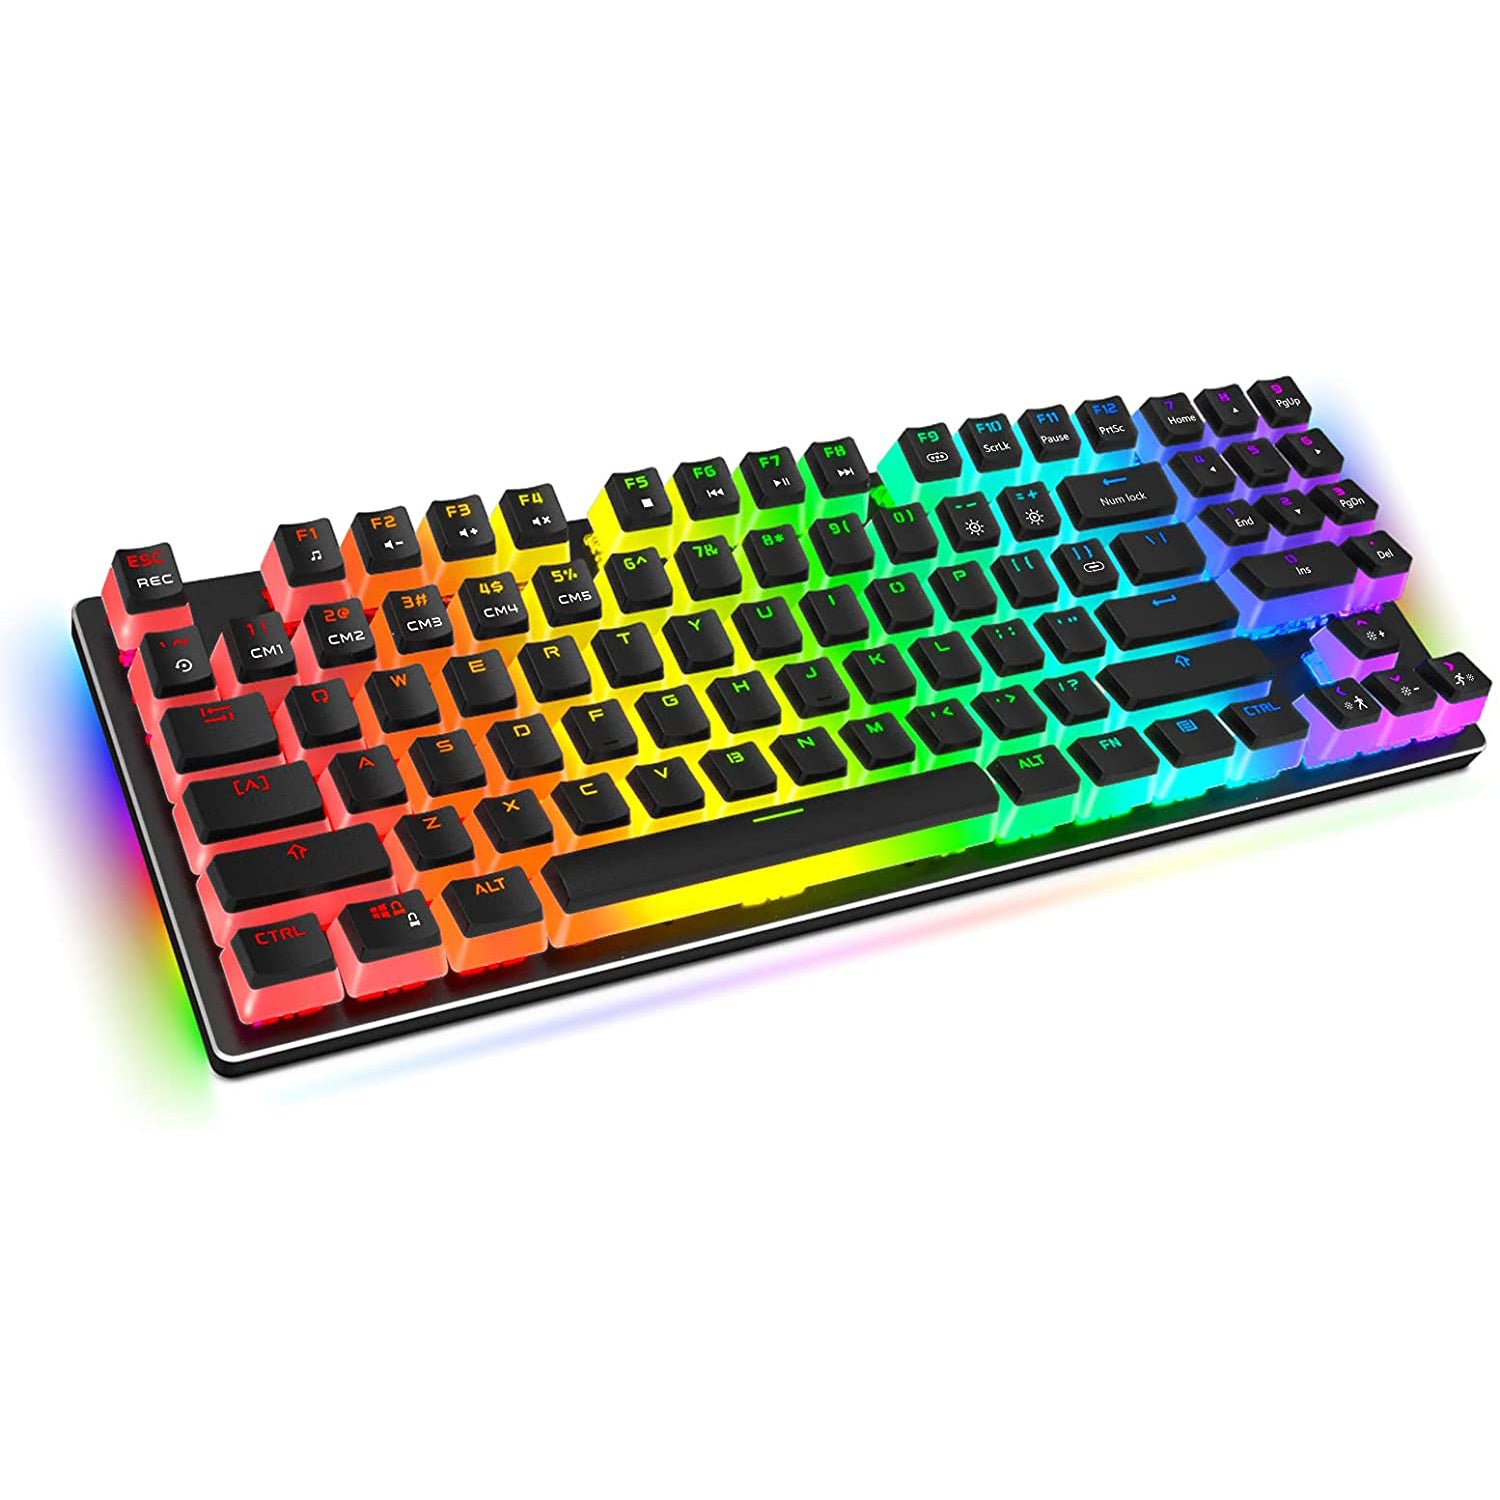 HAVIT KB851L Gaming Mechanical Keyboard with 89 Keys PBT Pudding Keycaps & RGB Backlights